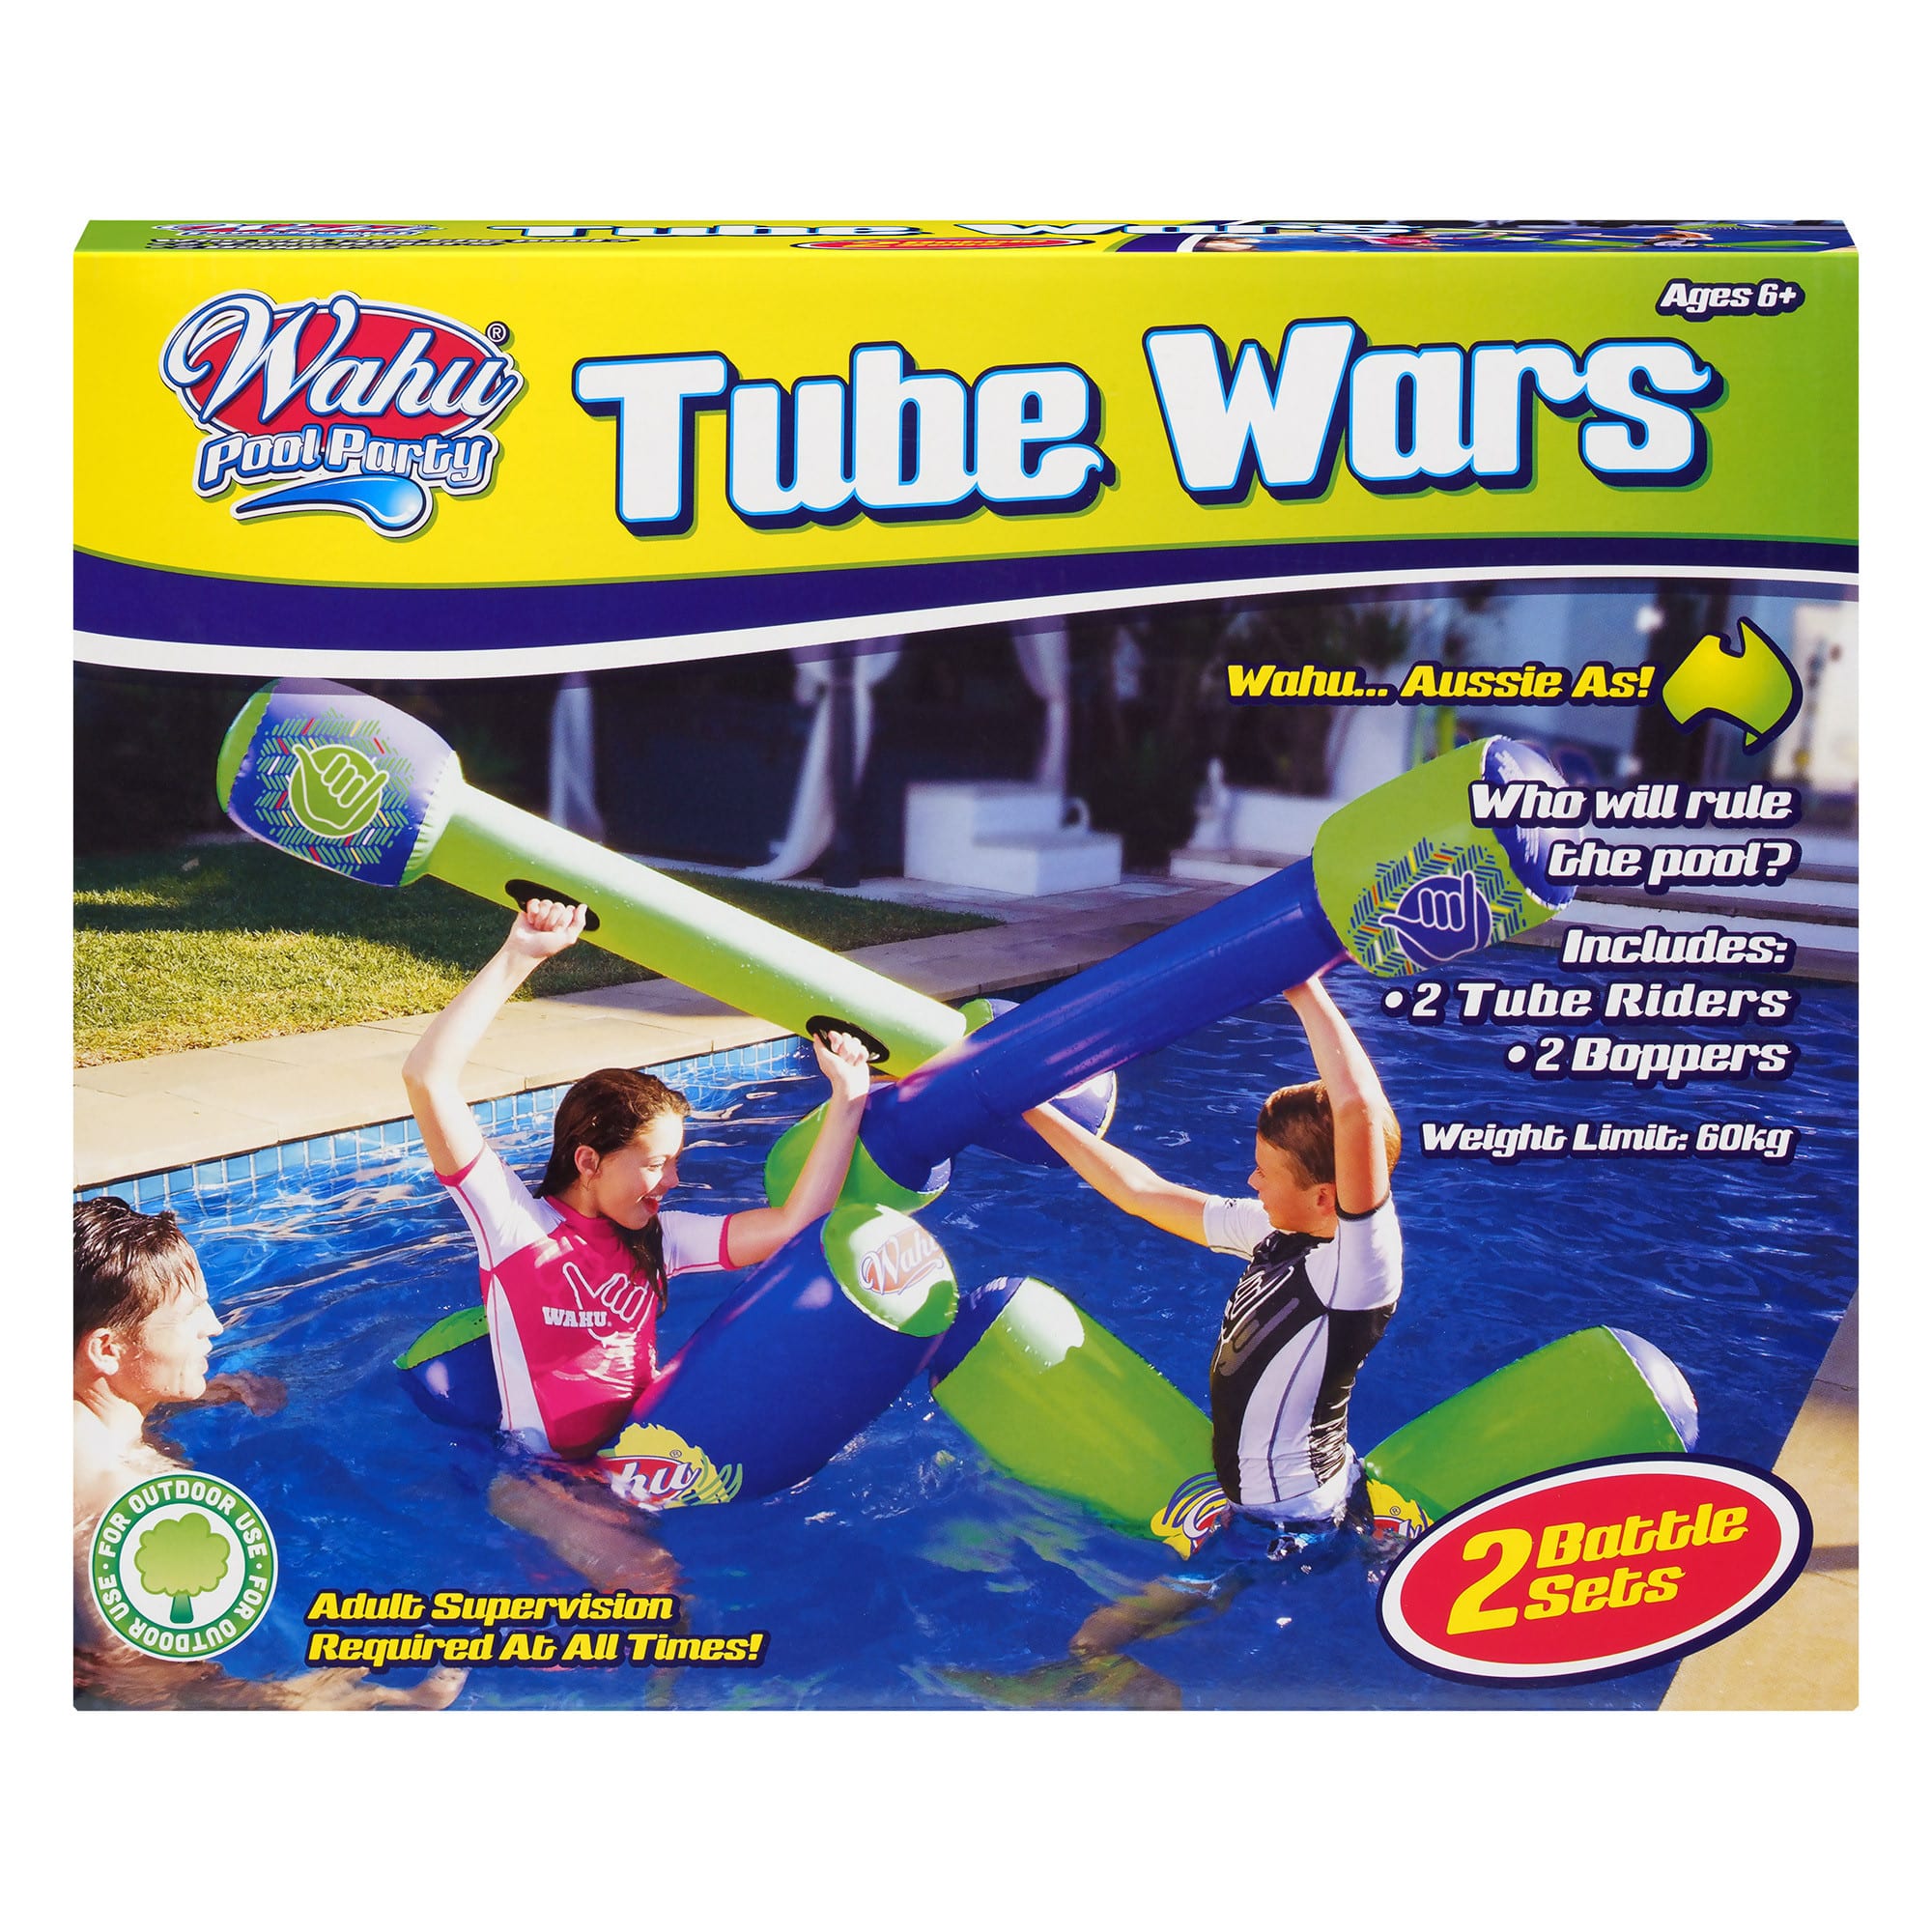 Wahu - Pool Party - Tube Wars